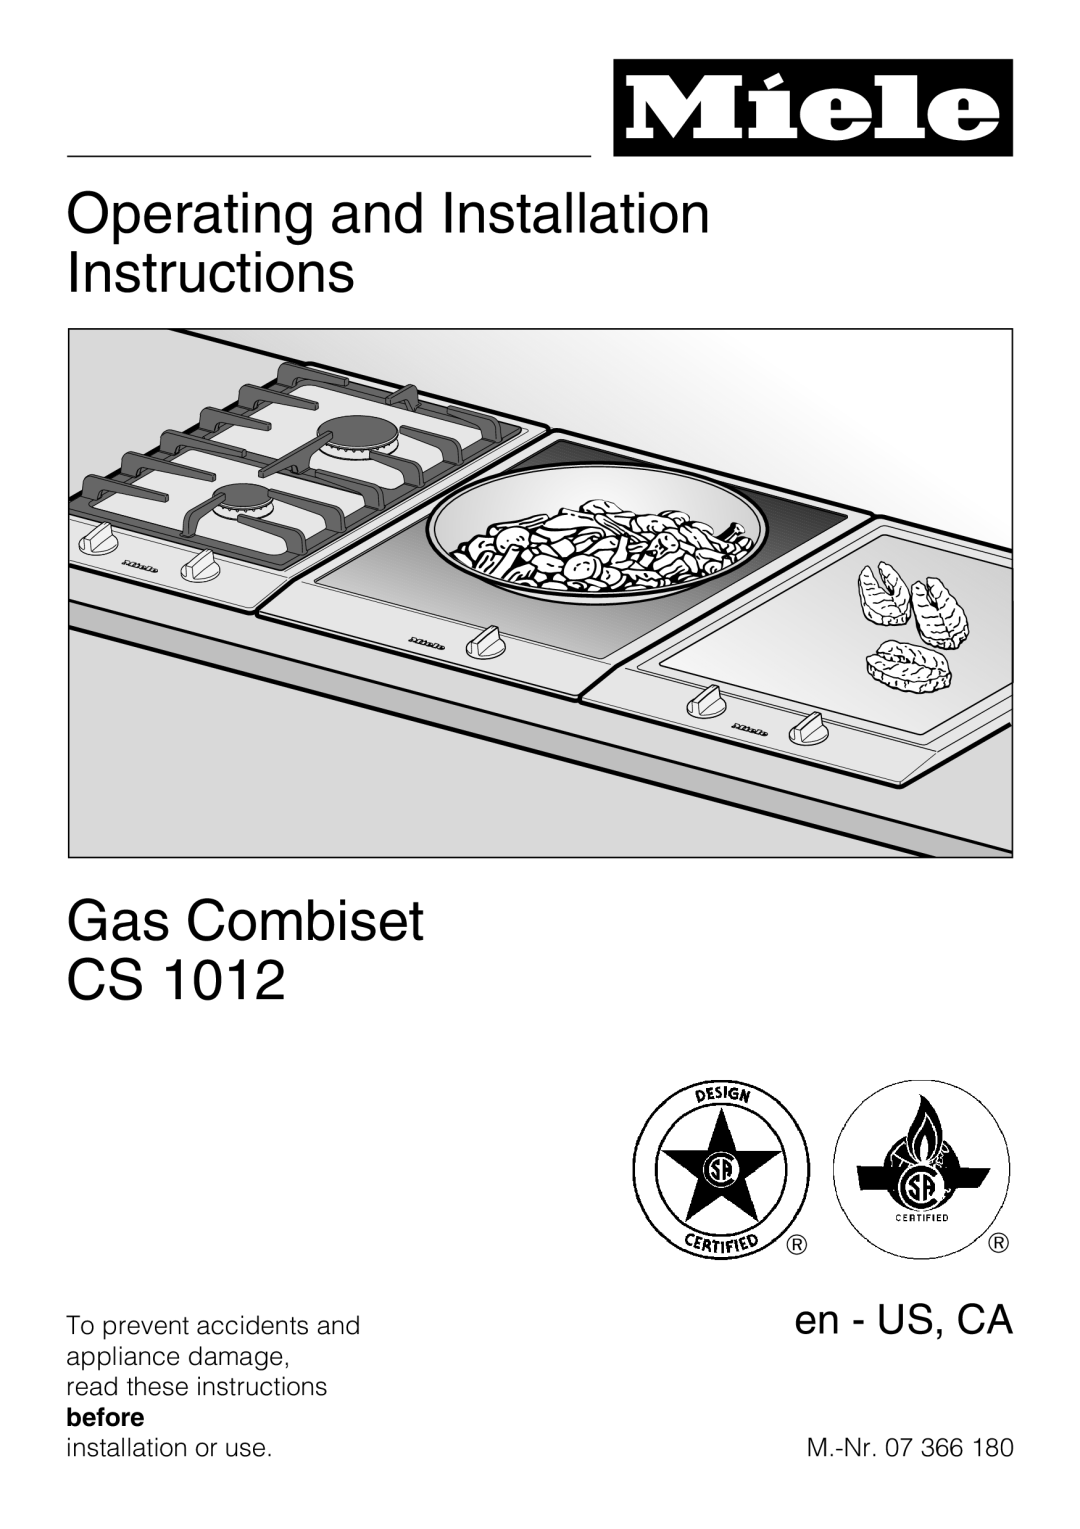 Miele CS 1012 installation instructions Operating and Installation Instructions, Gas Combiset CS, en - US, CA 